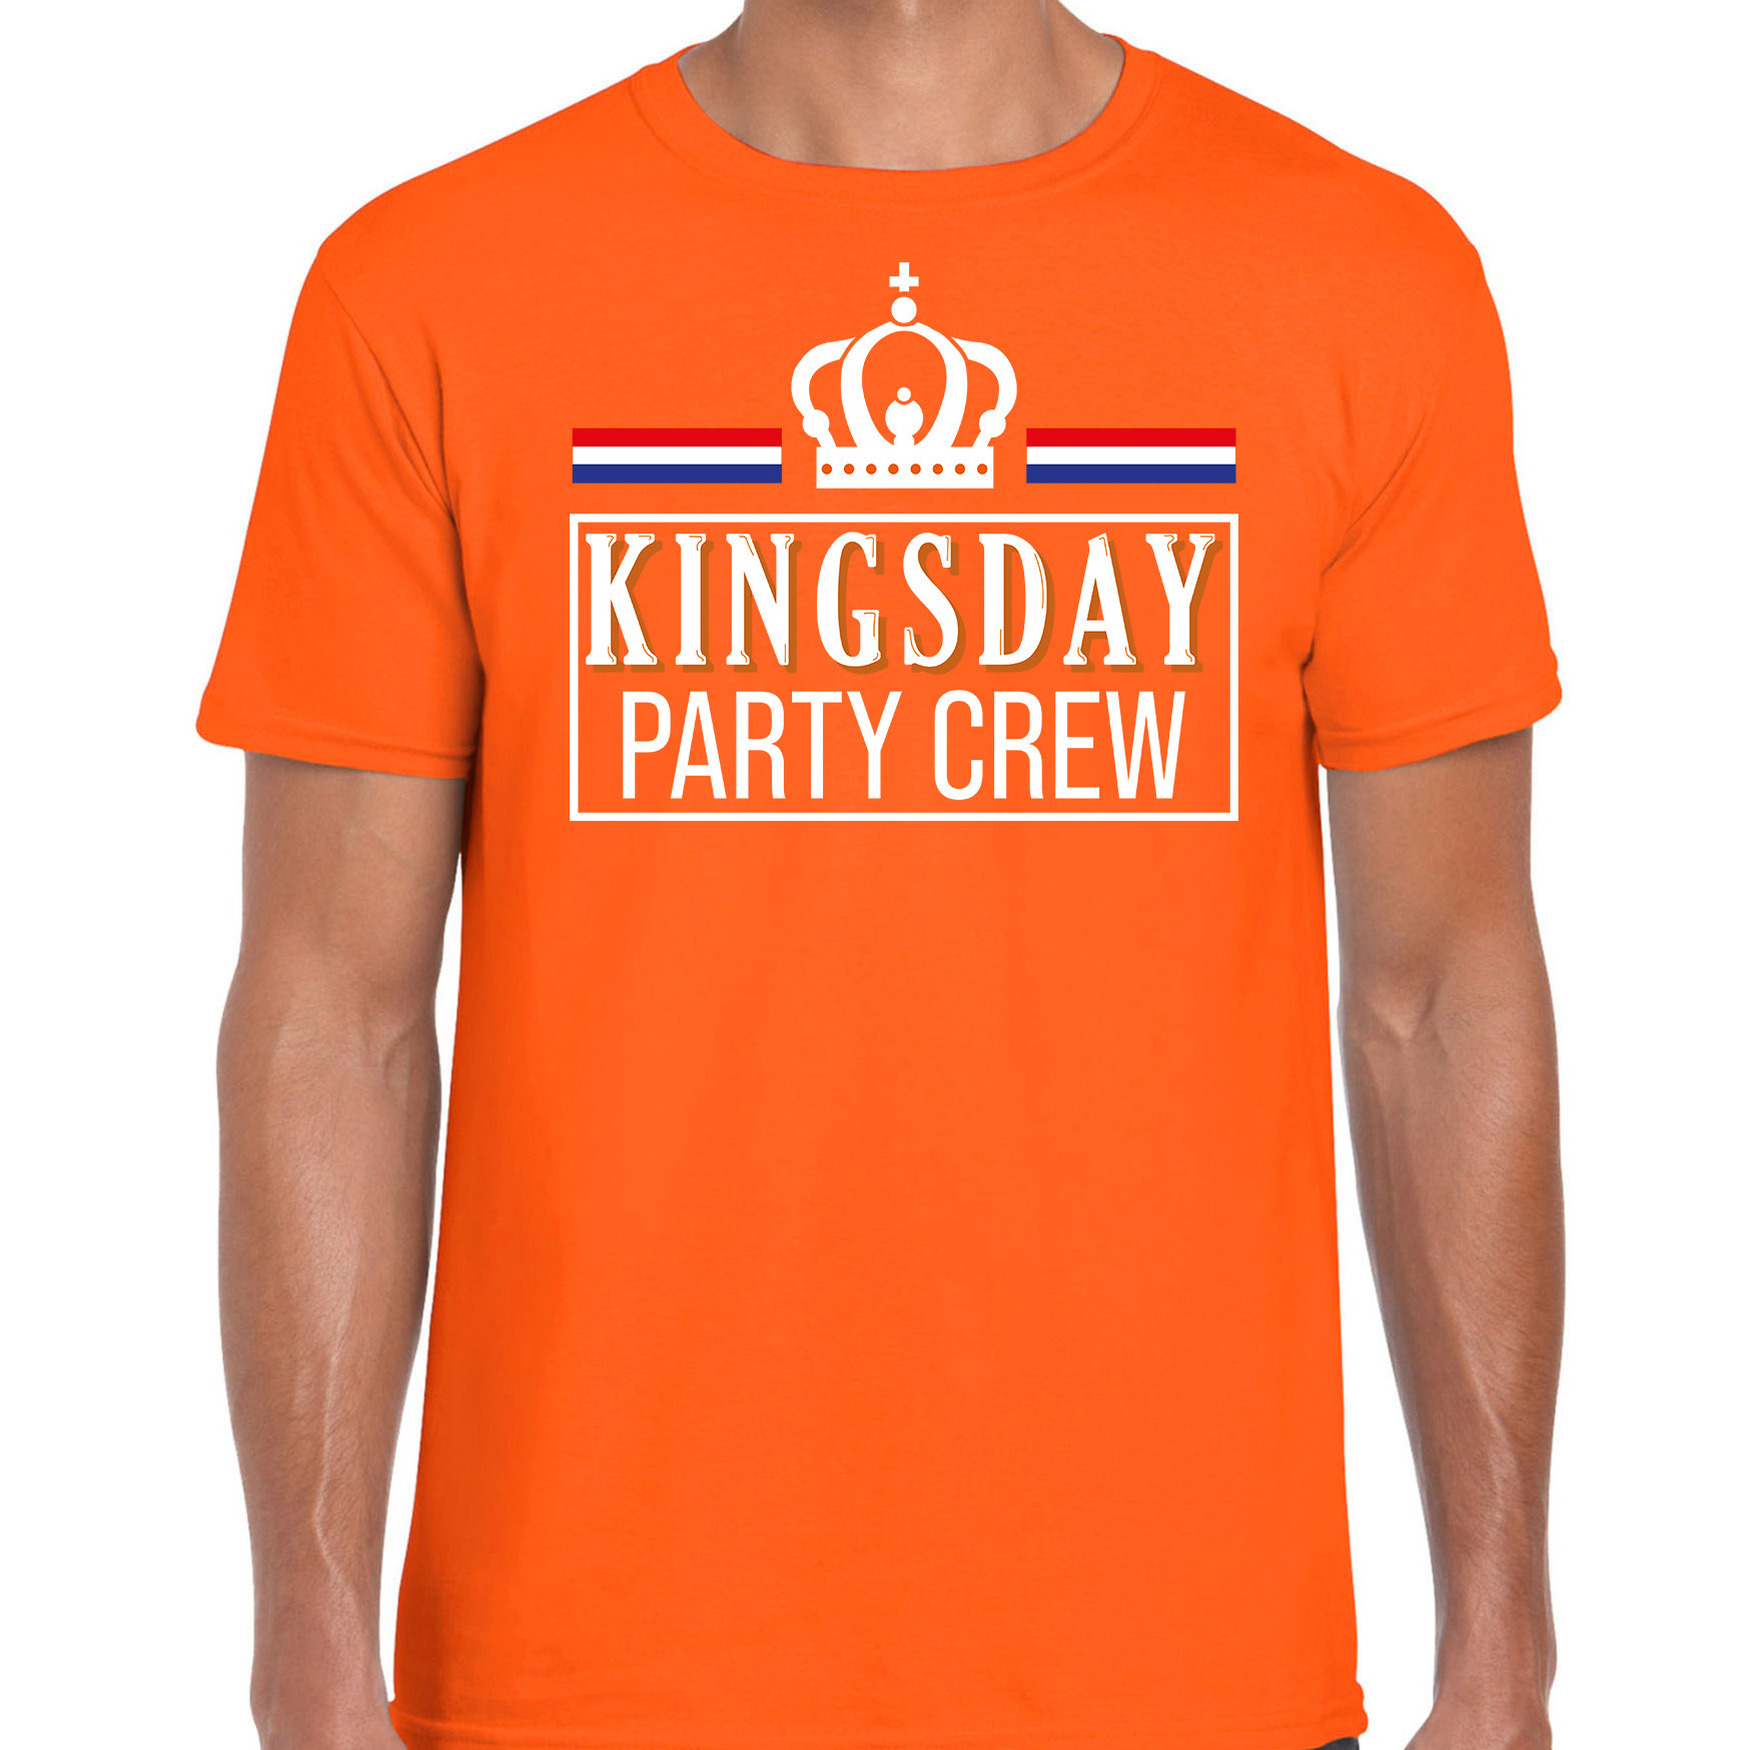 Kingsday party crew t-shirt oranje met witte letters voor heren Koningsdag shirts